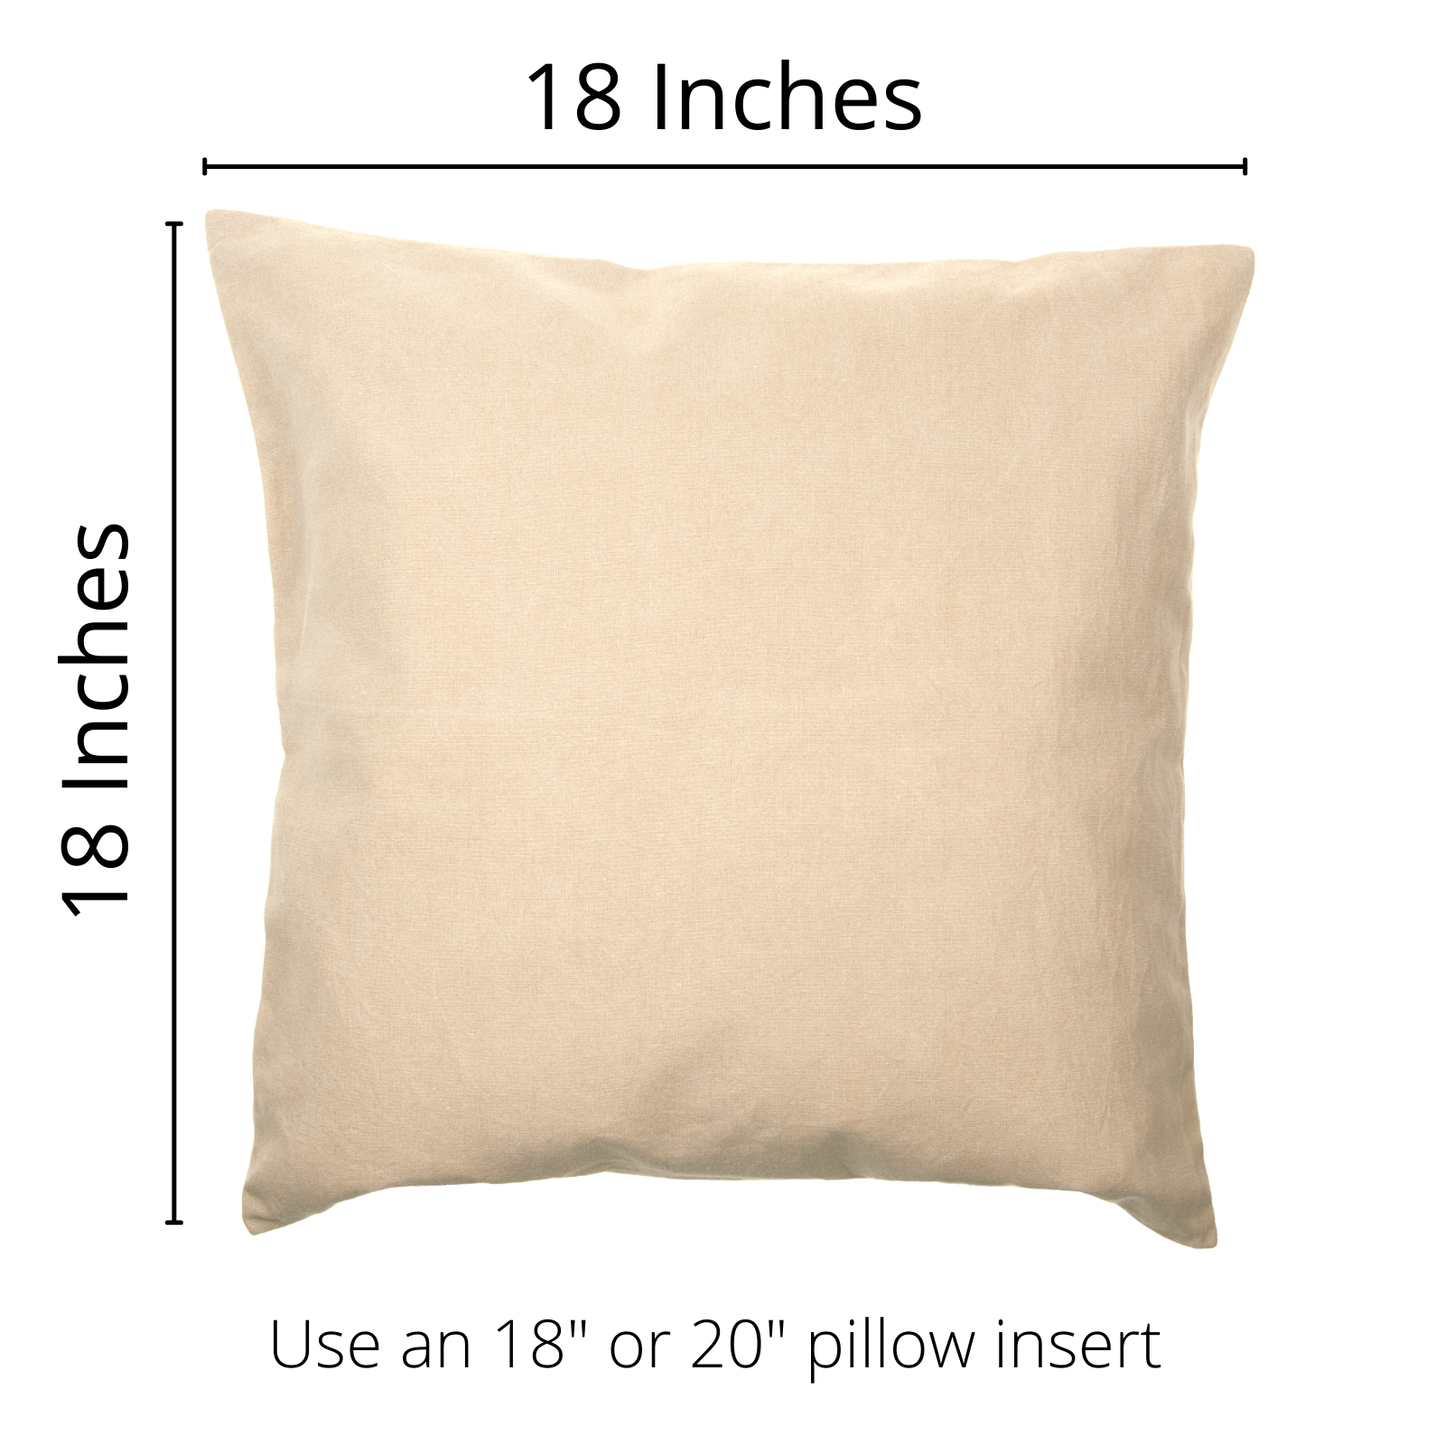 P. Cottontail Farms Pillow Cover